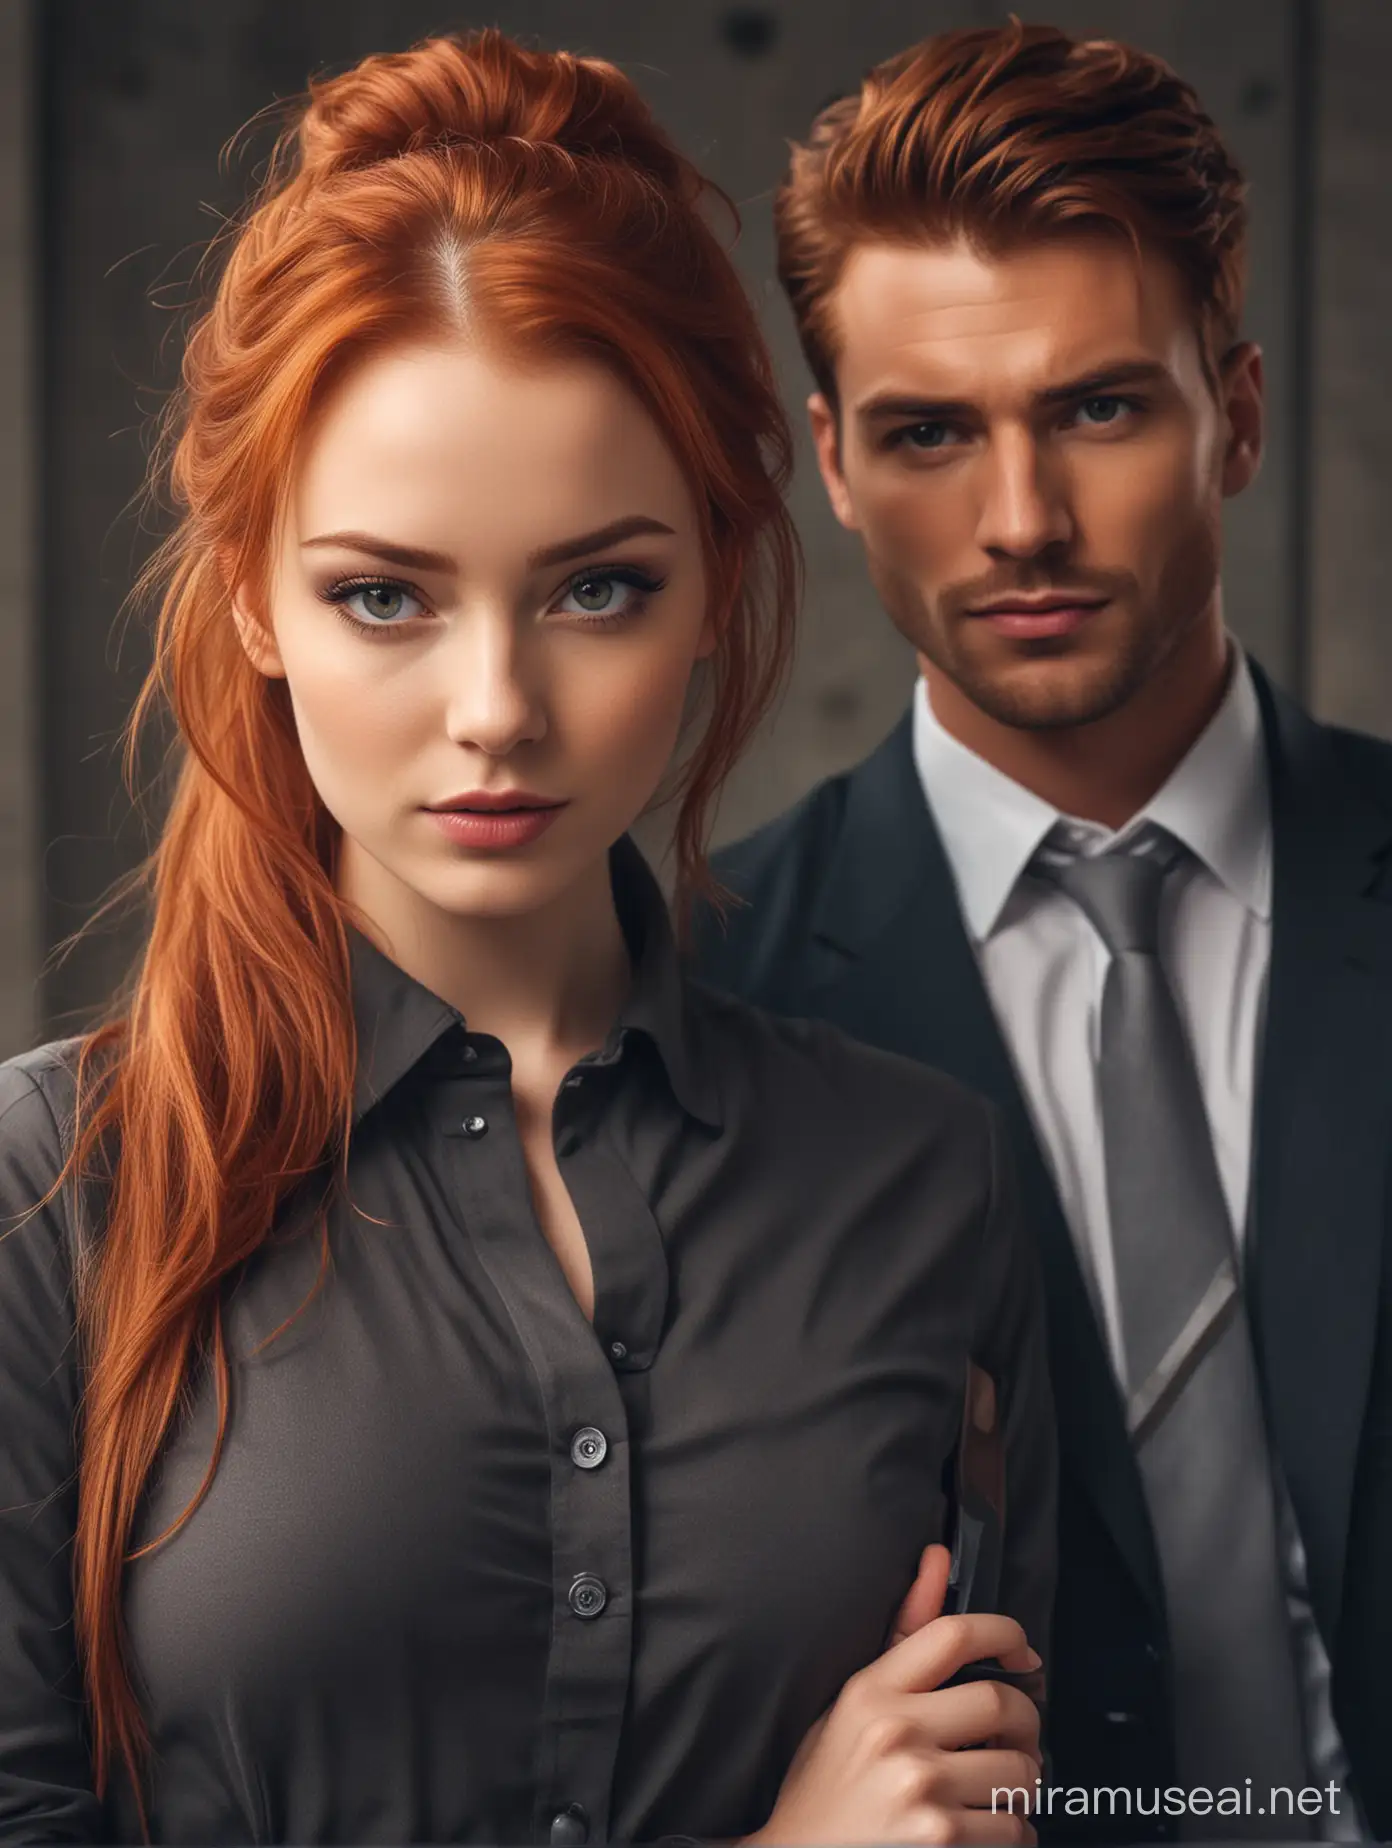 Charming Criminal Standing Alongside Gorgeous Redhead Woman